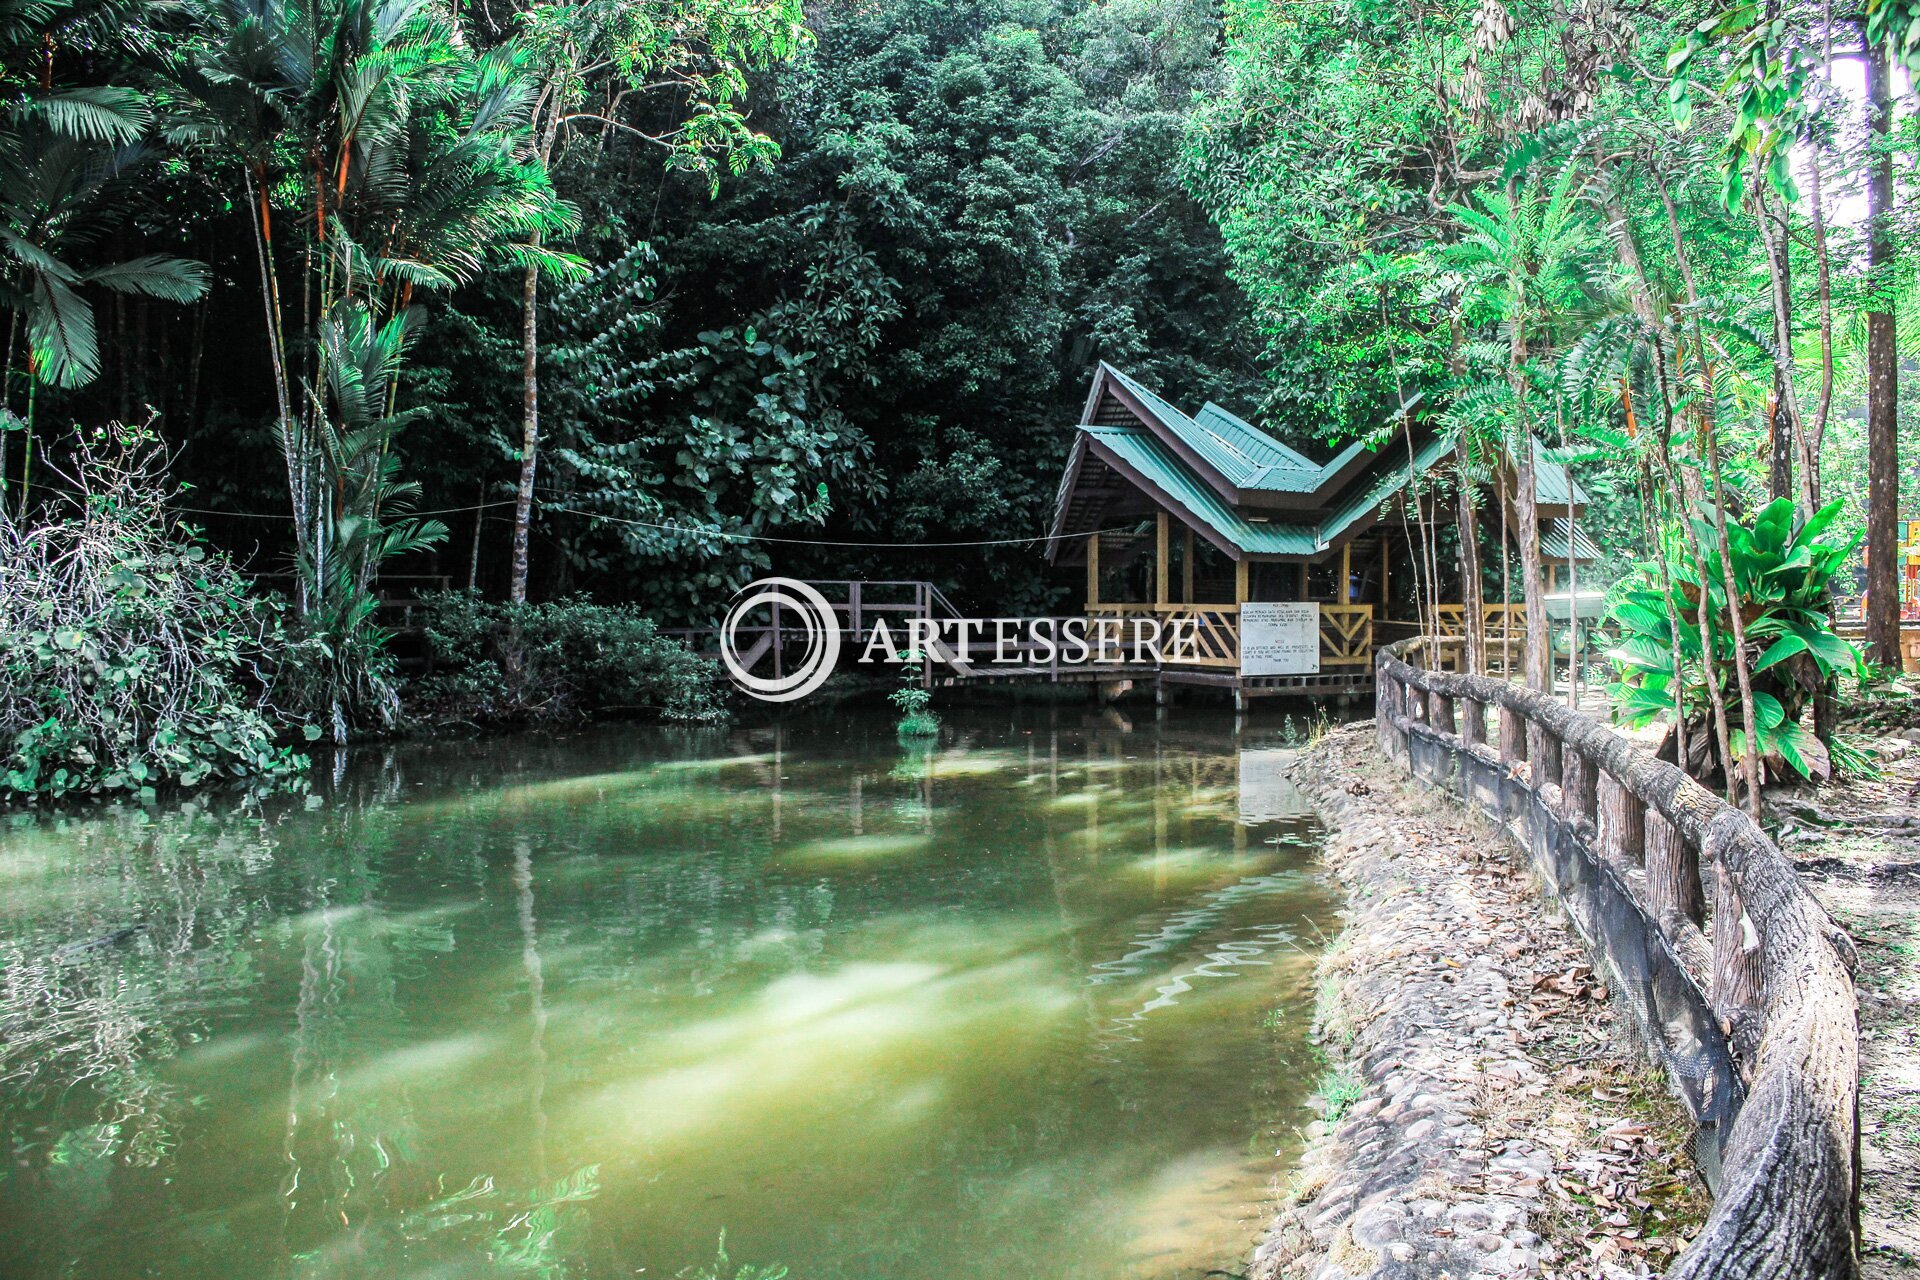 Forestry Museum Brunei, Sungai Liang